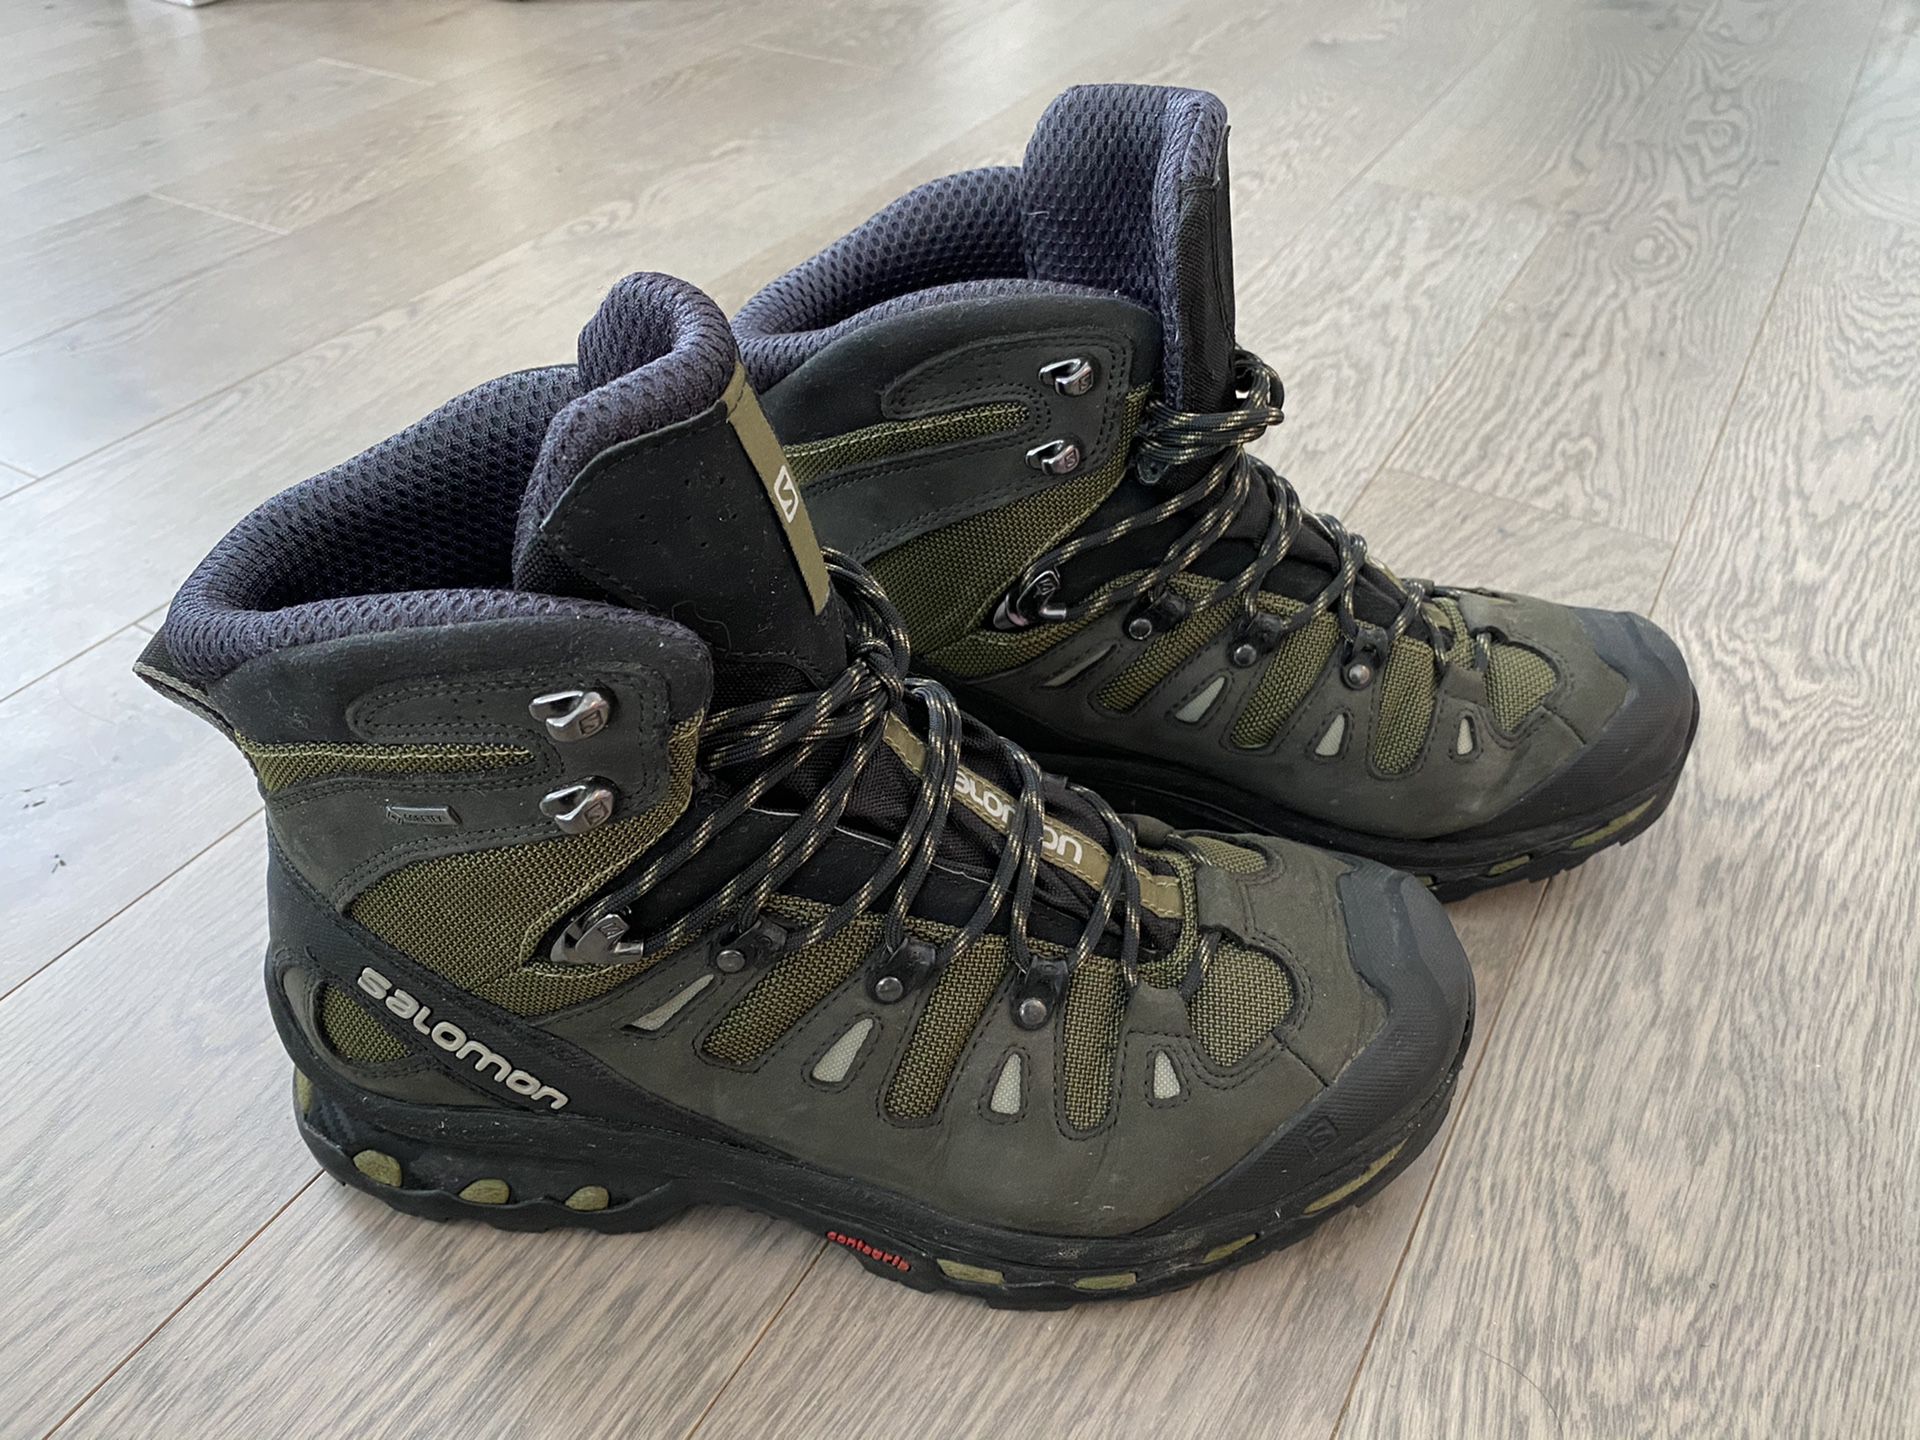 Salomon Quest 4D 3 GTX Hiking Backpacking Waterproof Boots-Men’s US 10 Goretex